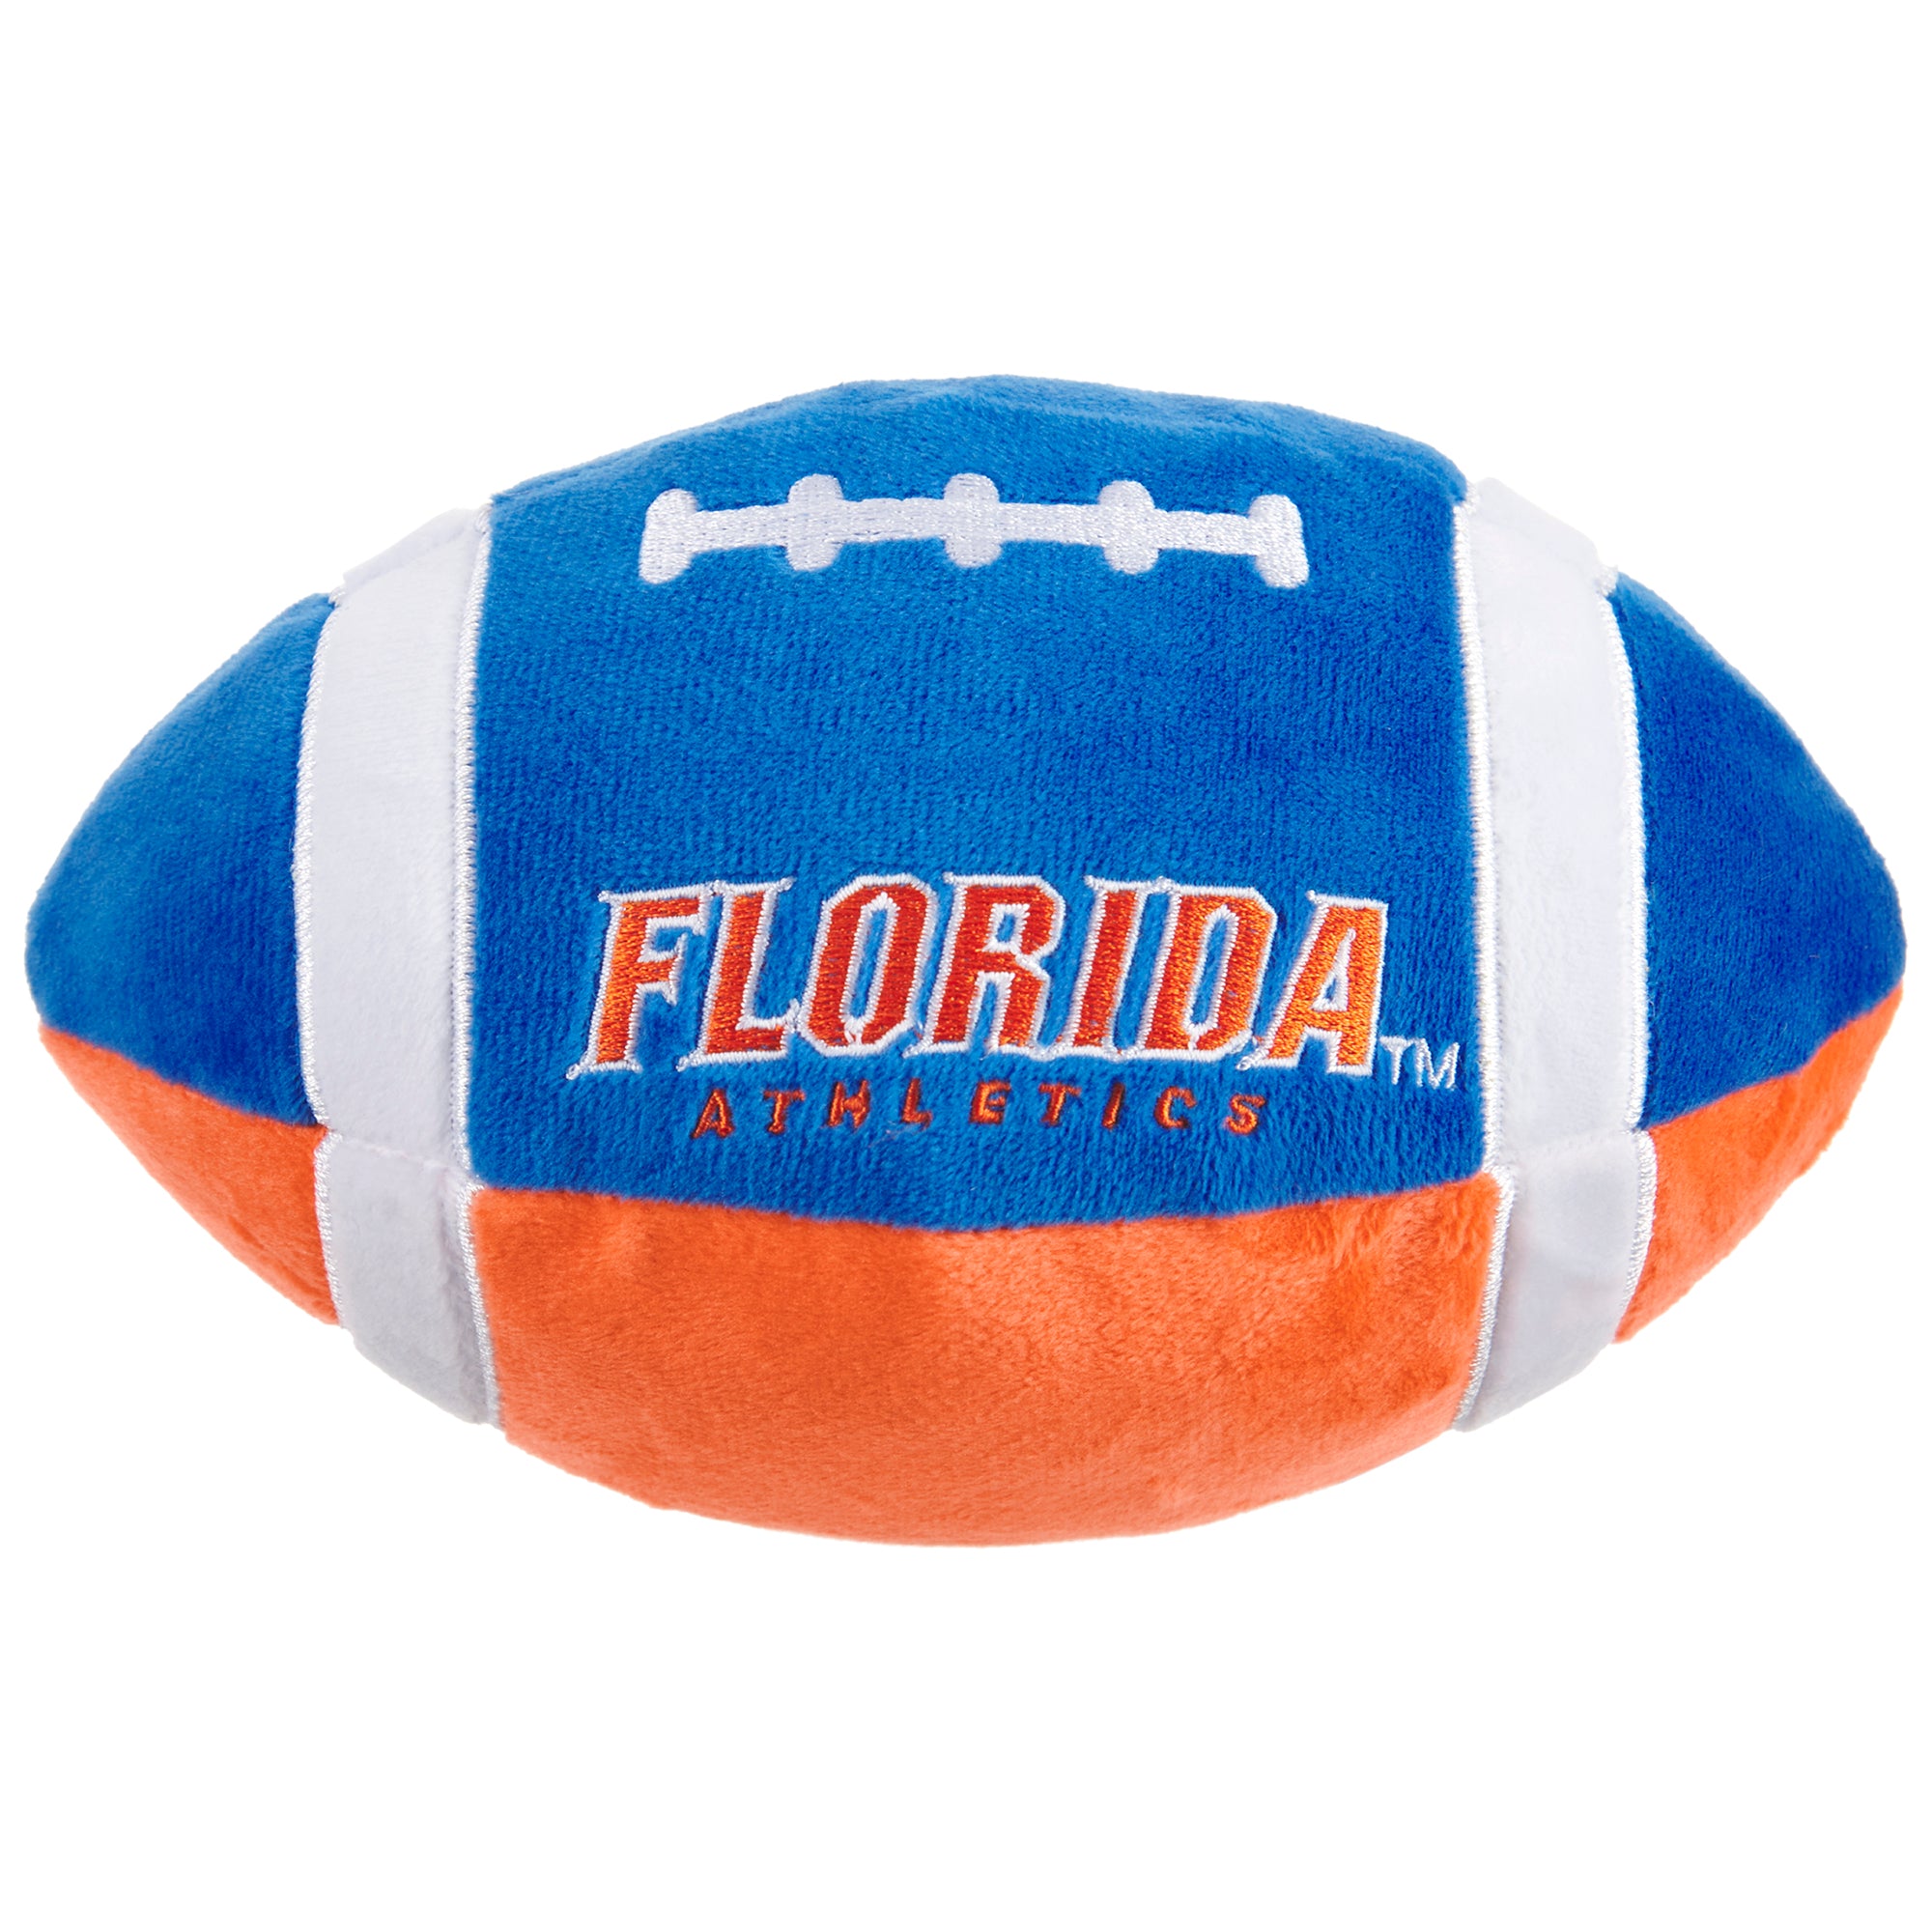 Florida Fetchin Football Toy